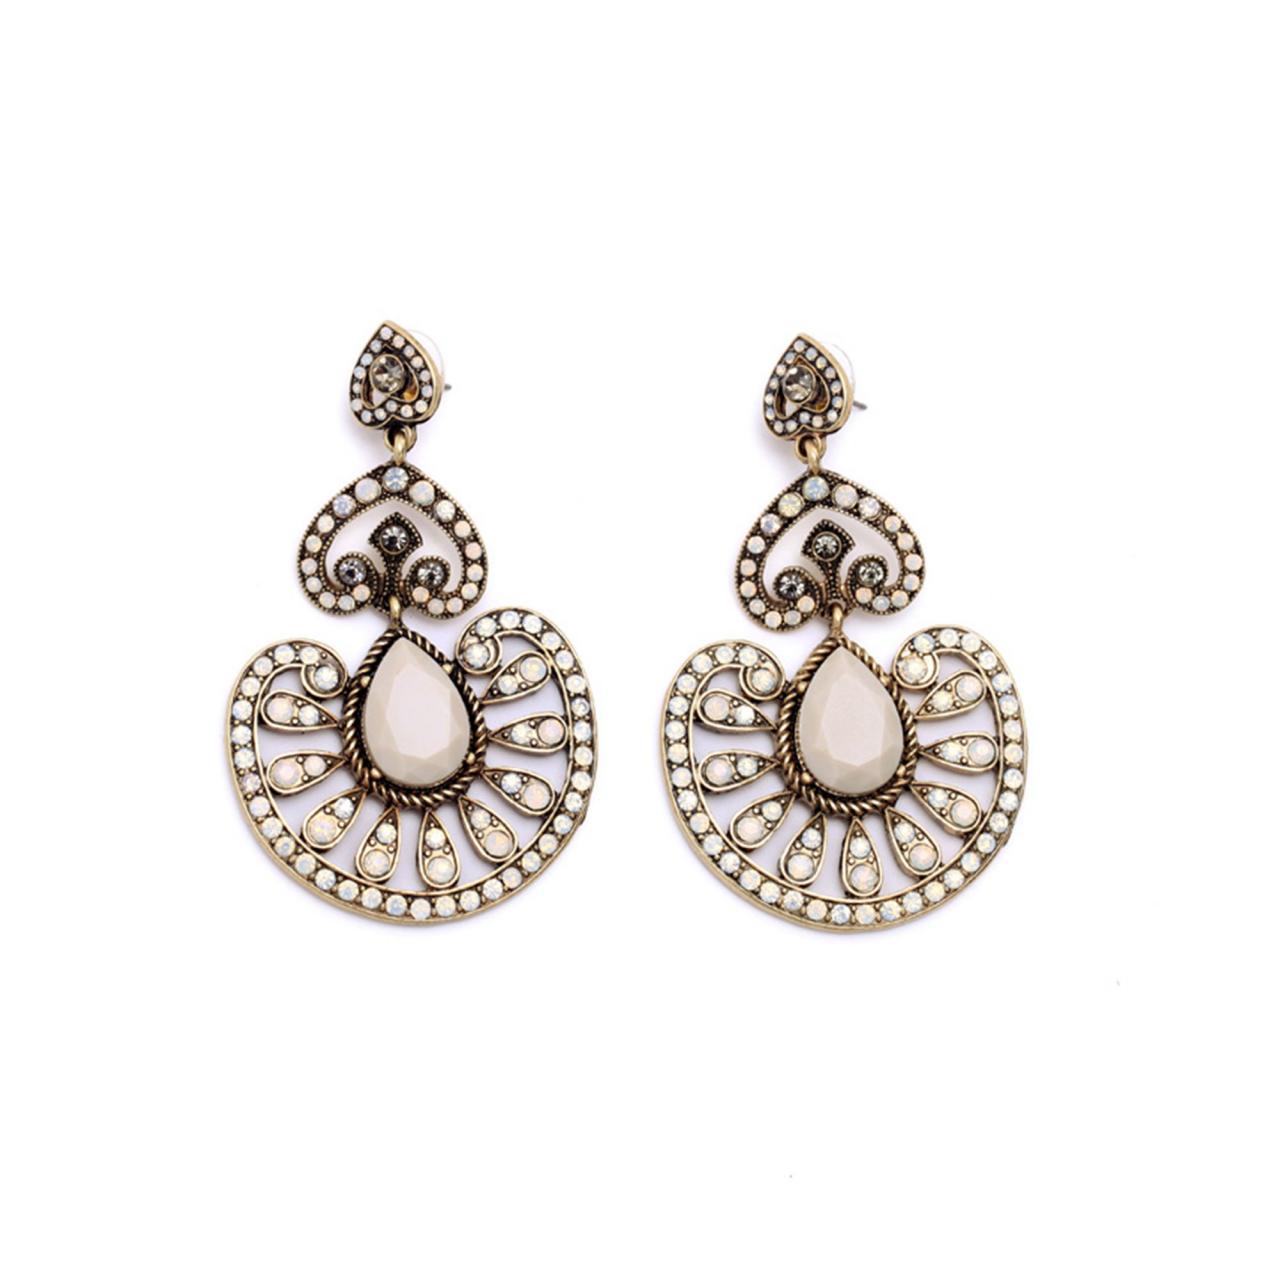 Boho Earrings / Statement Jewelry / Statement Earrings / Queen Earrings / Vintage Earrings / Dangle Earrings / White Stones / White Earrings